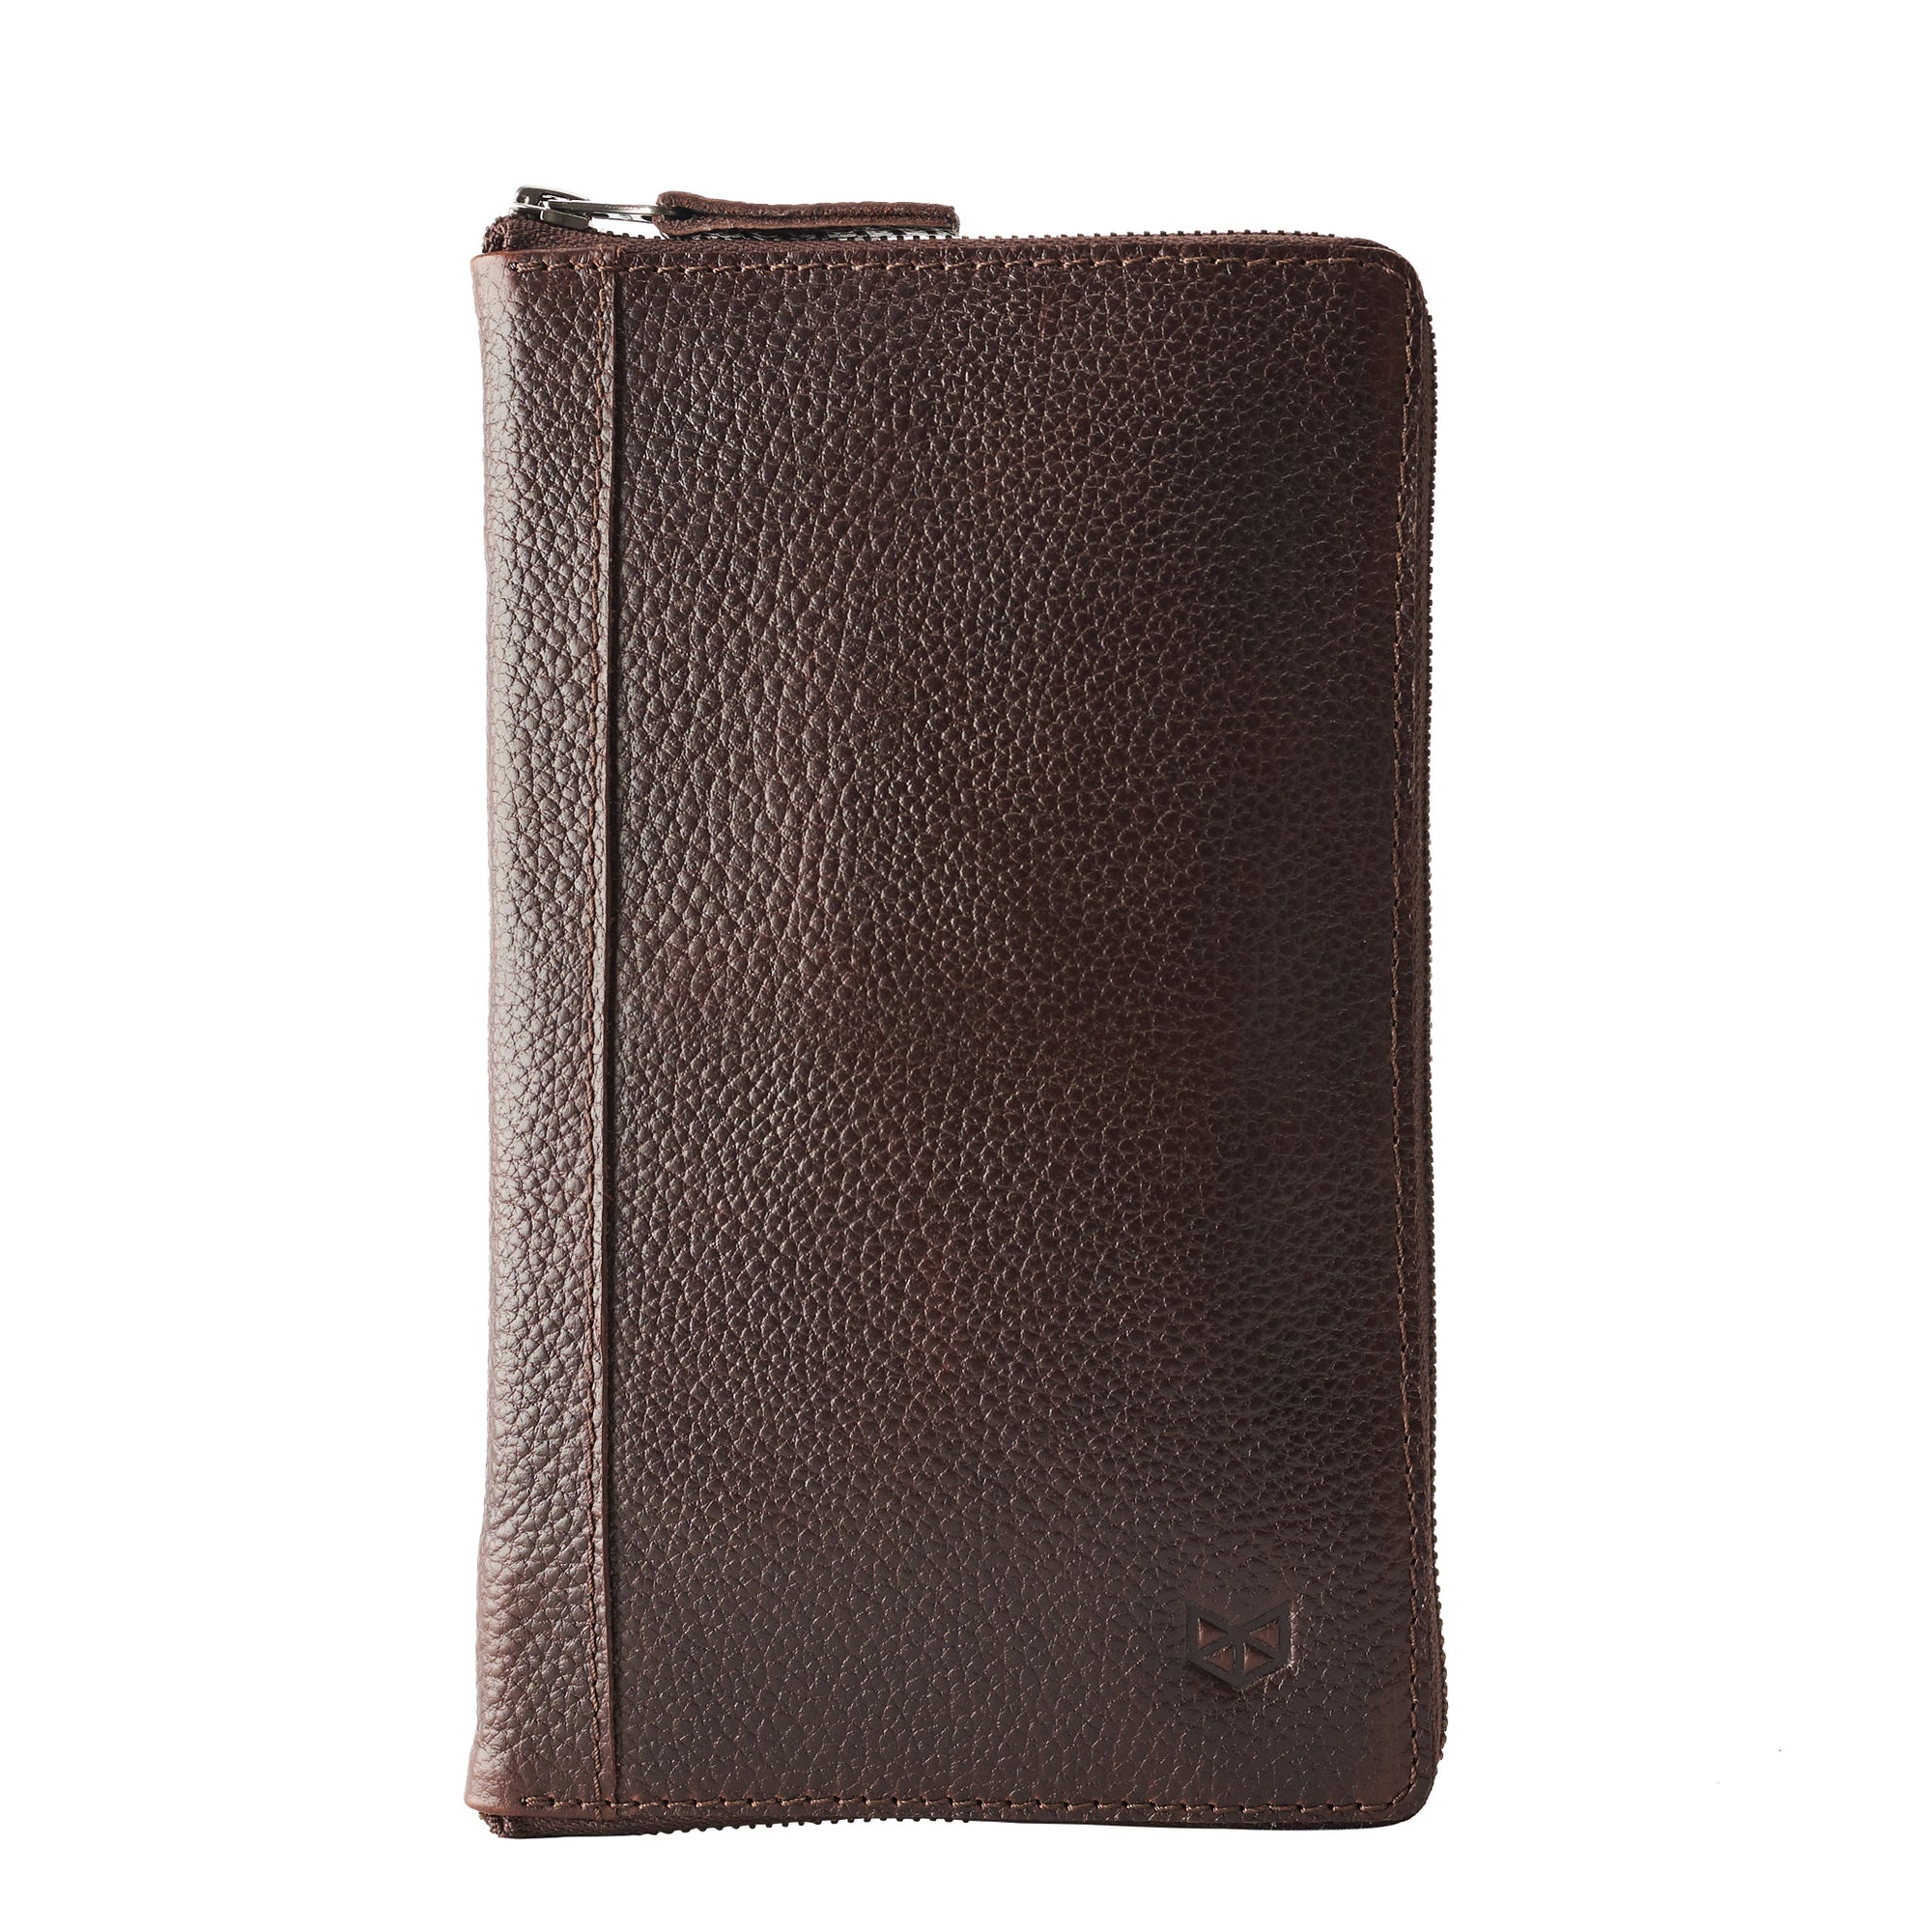 Cover. Dark brown Passport Holder for travelers, document organizer, travel journal by Capra Leather